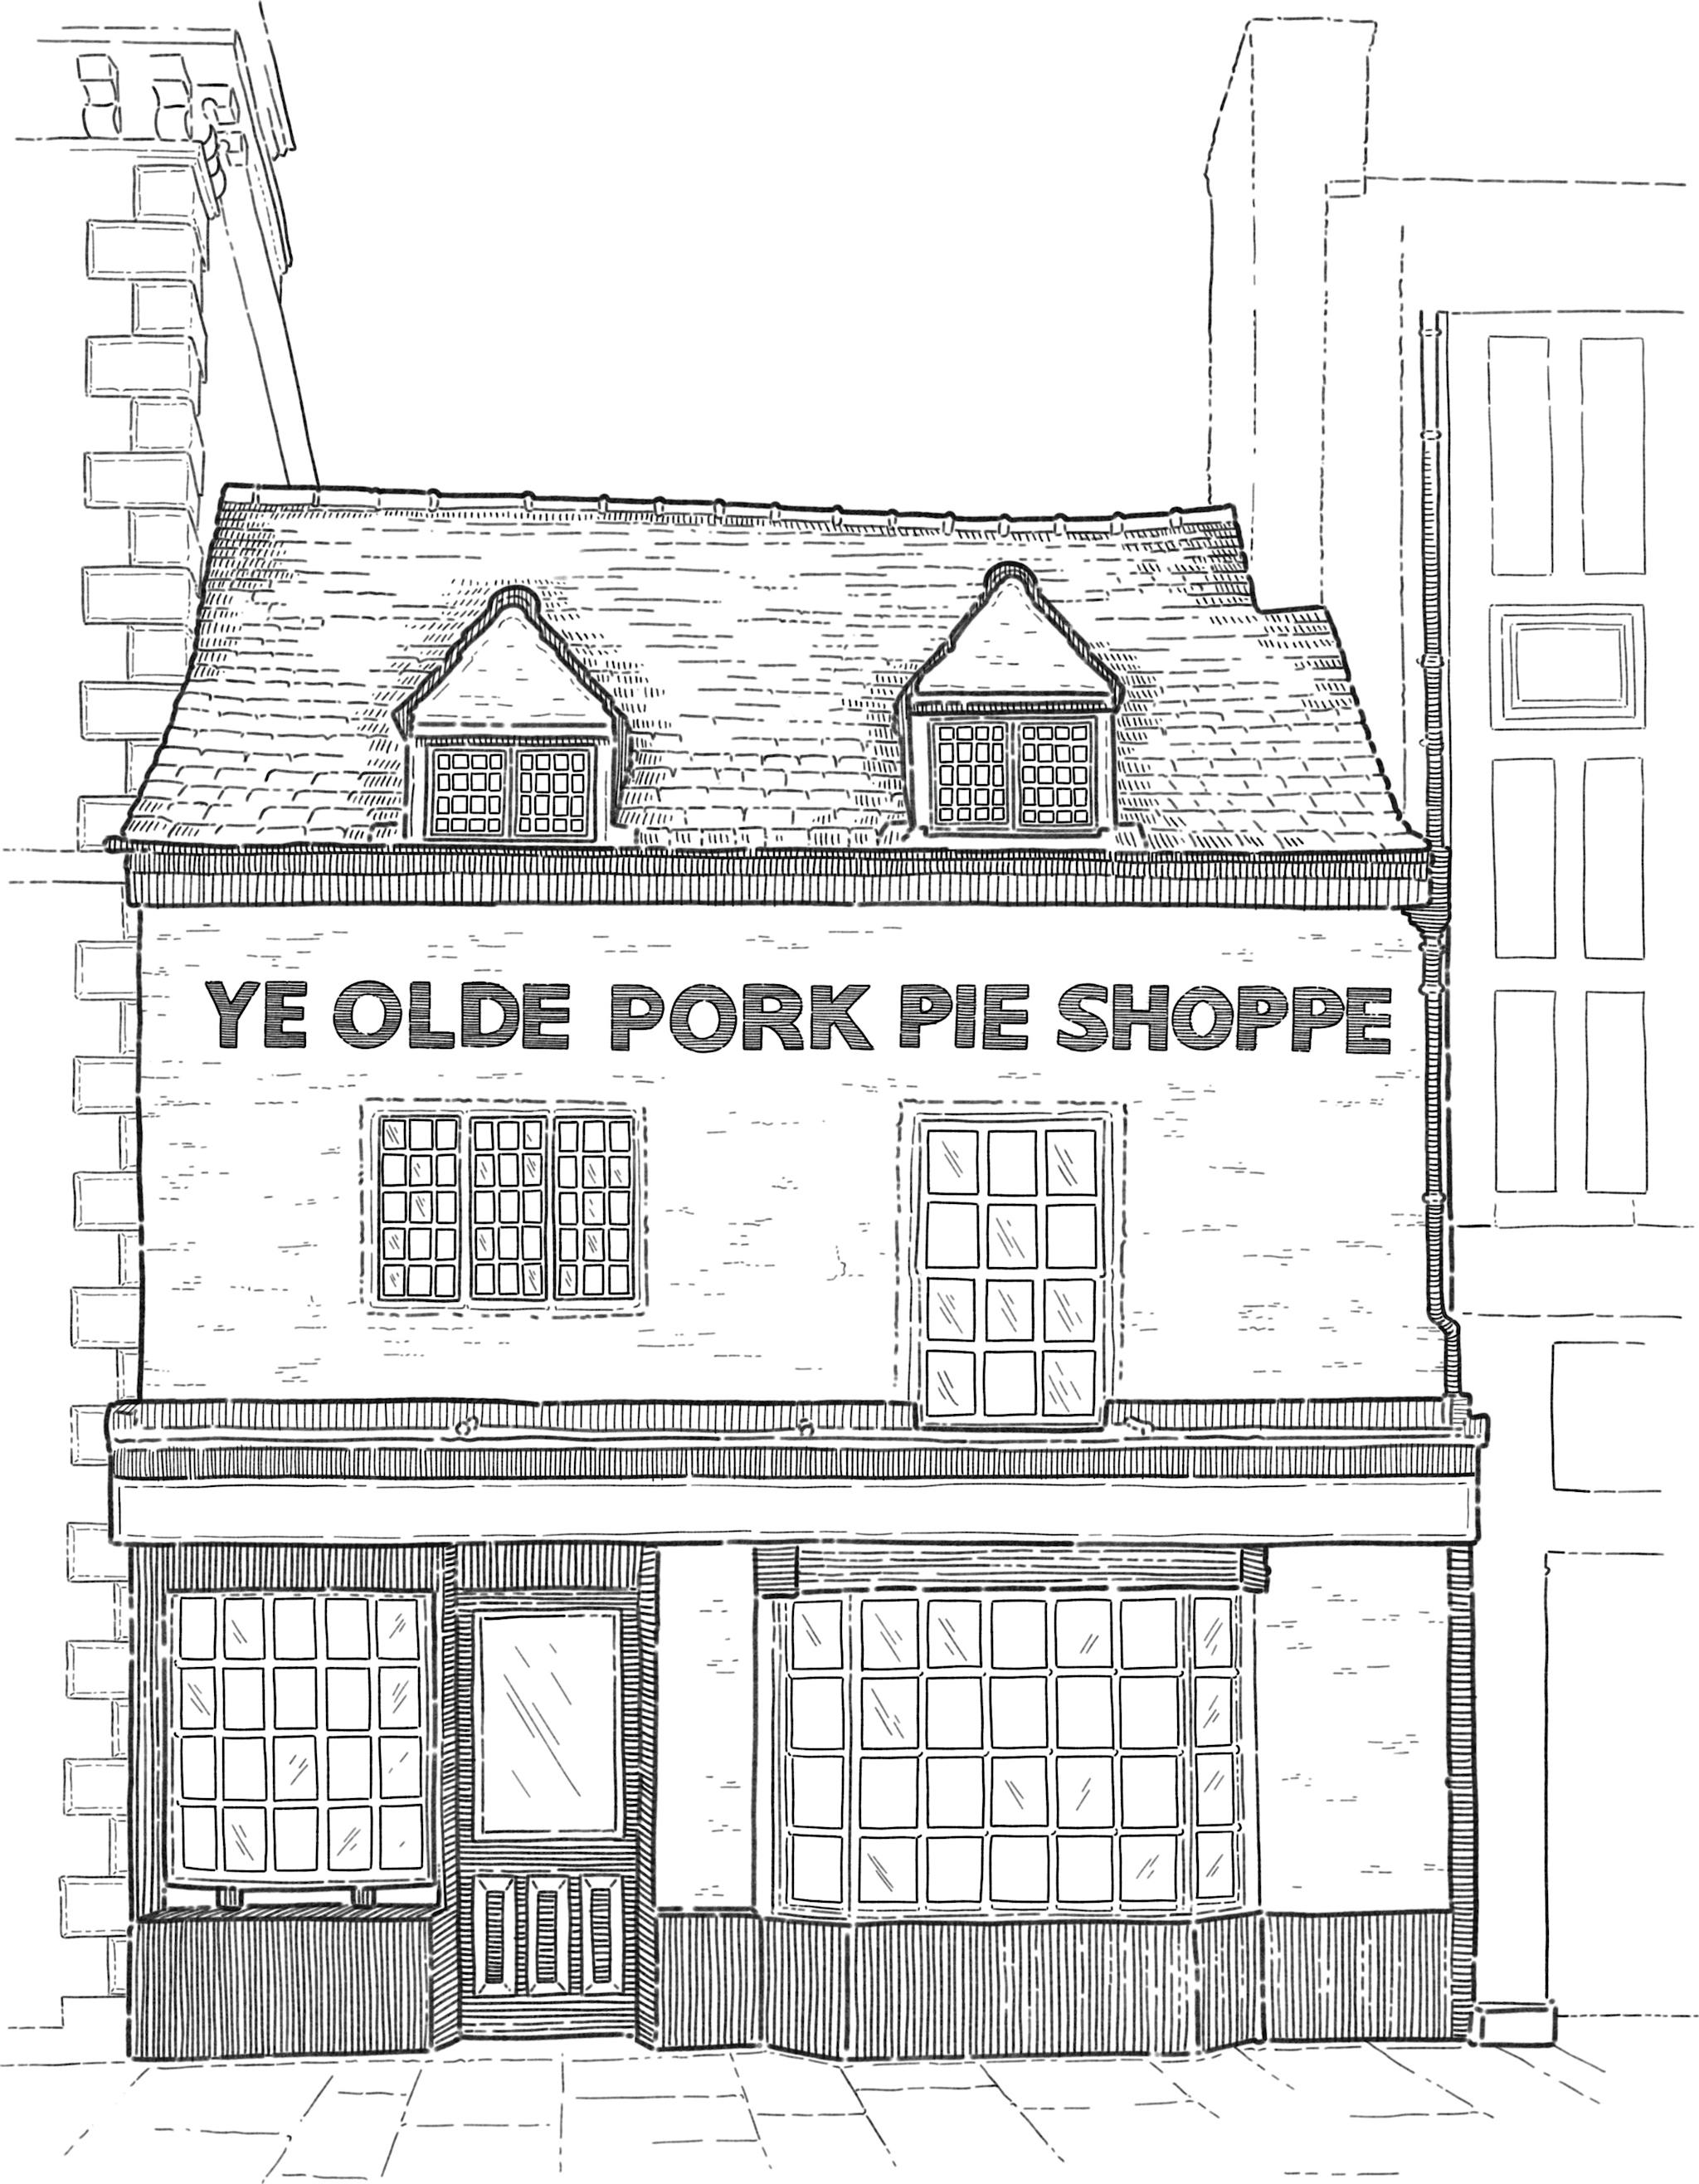 Ye Old Pork Pie building illustration in black and white